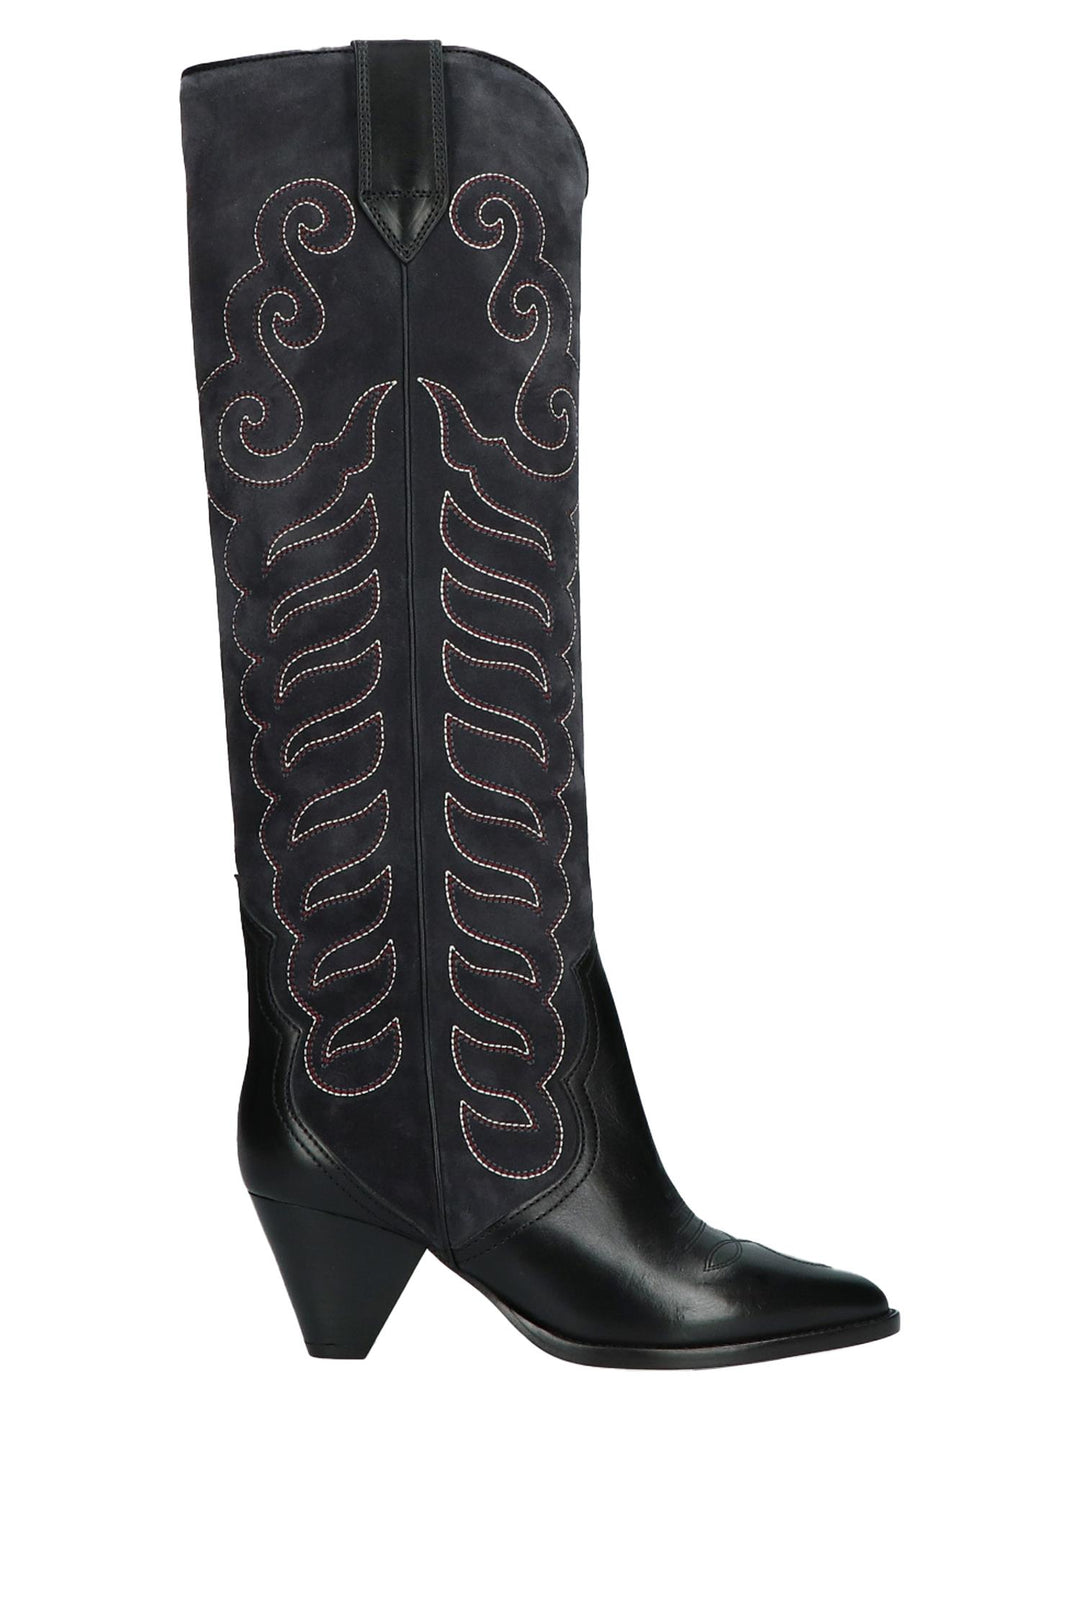 Liela High Boots Black/Faded Black